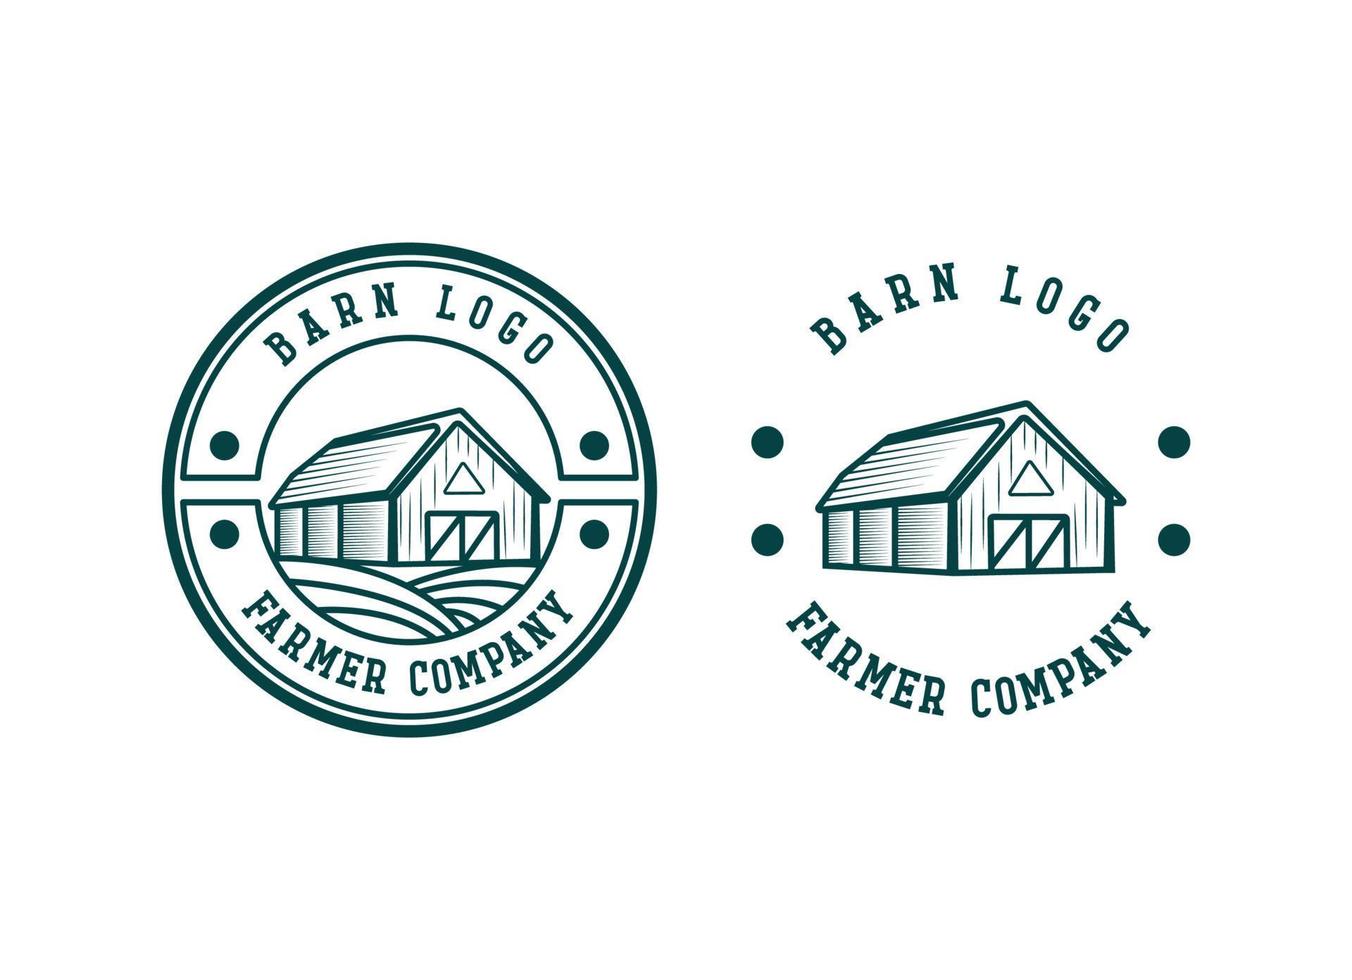 logotipo da indústria de casa de fazenda. modelo de design de logotipo de celeiro. vetor